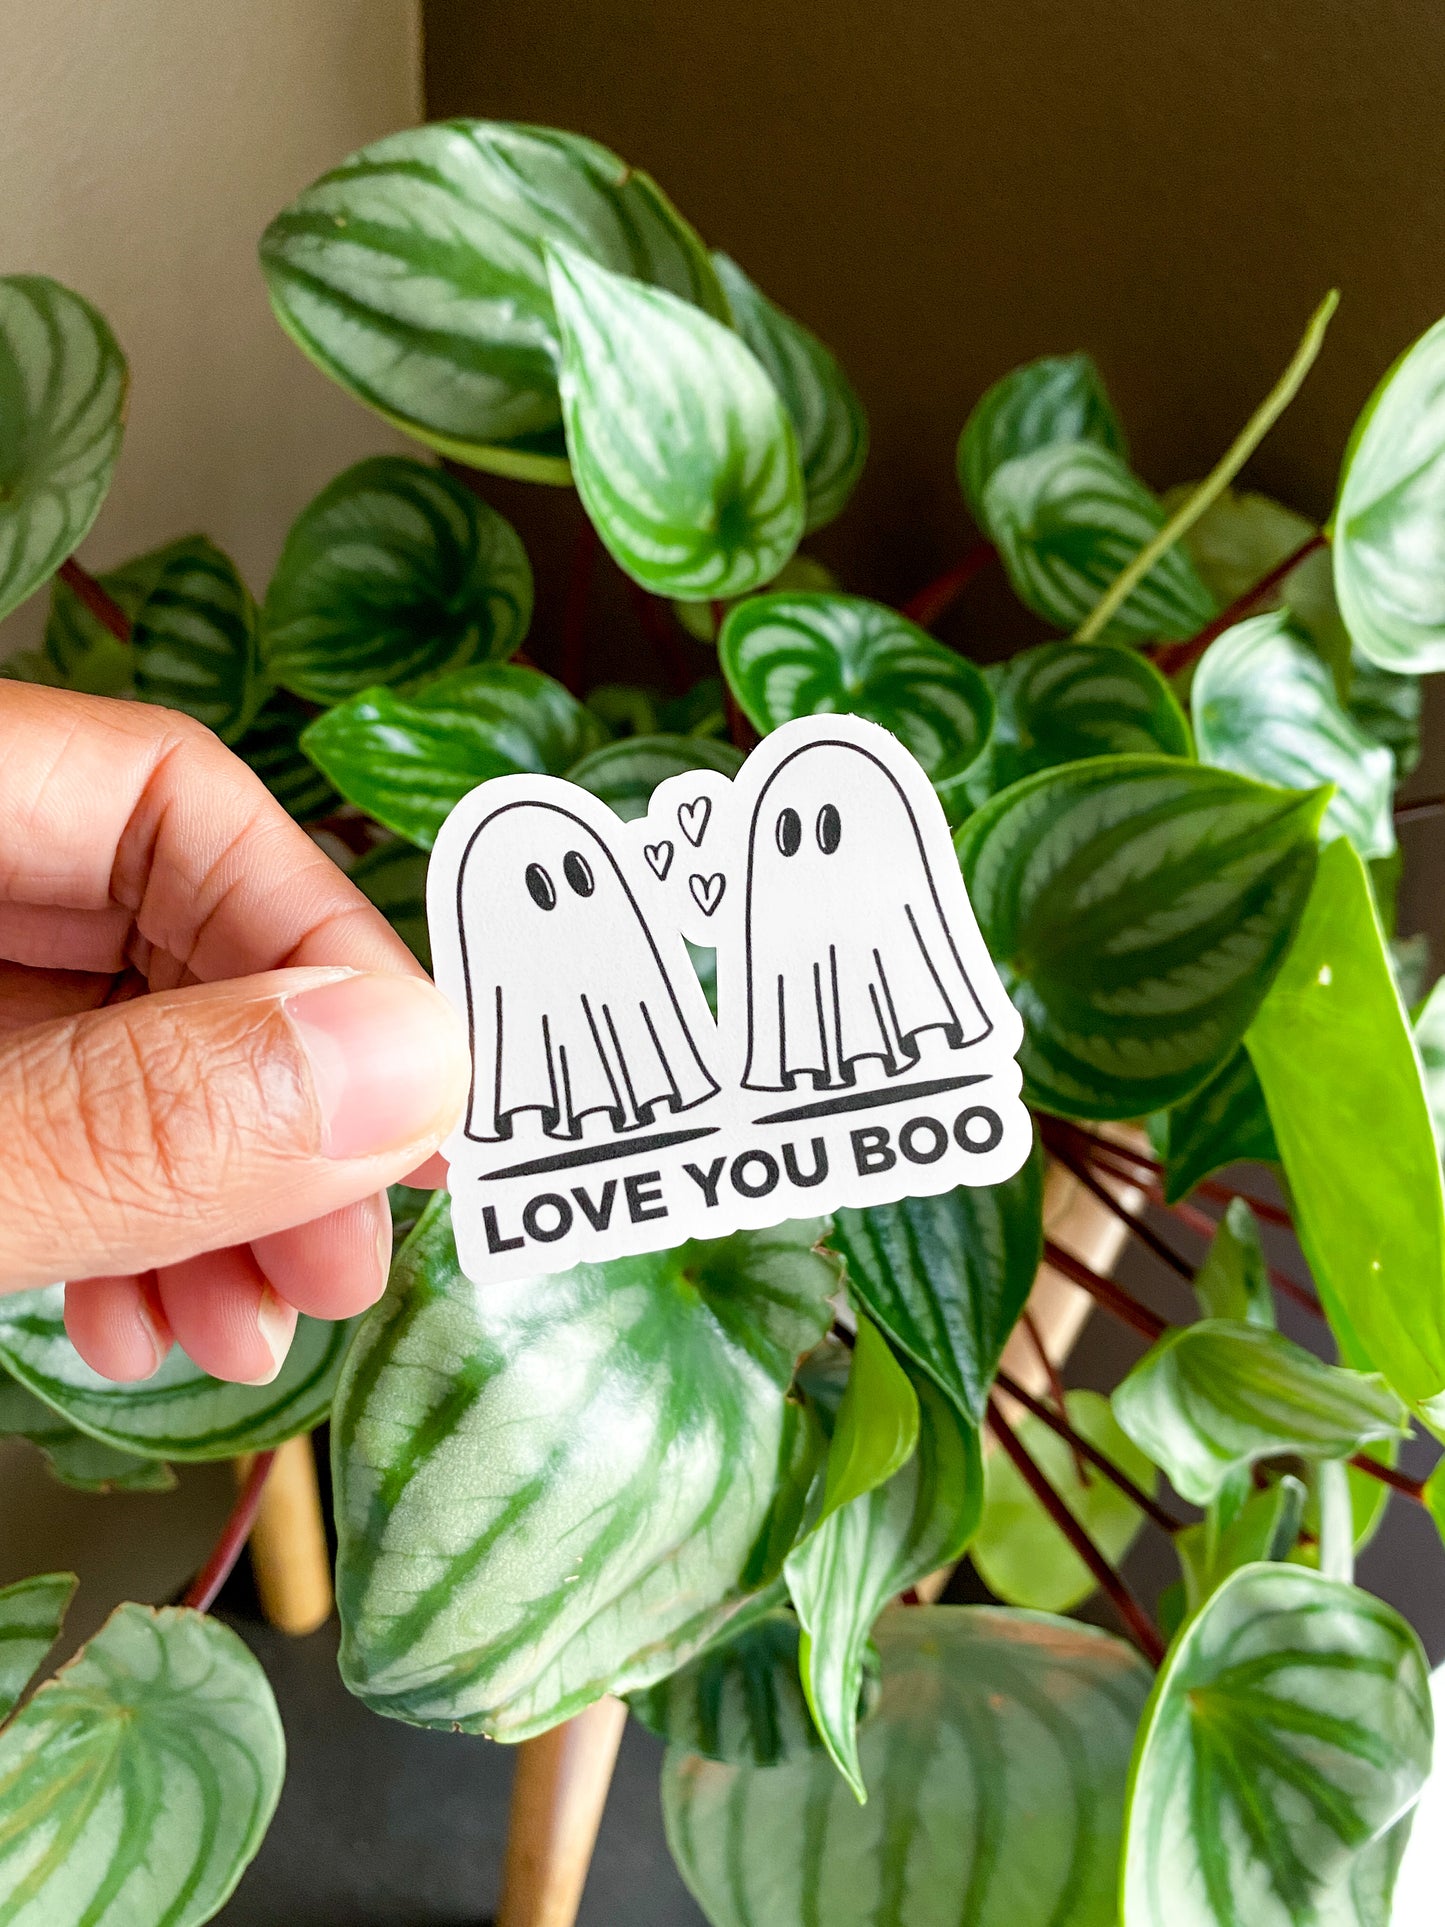 Single Love You Boo sticker. 2 ghosts saying "love you boo"